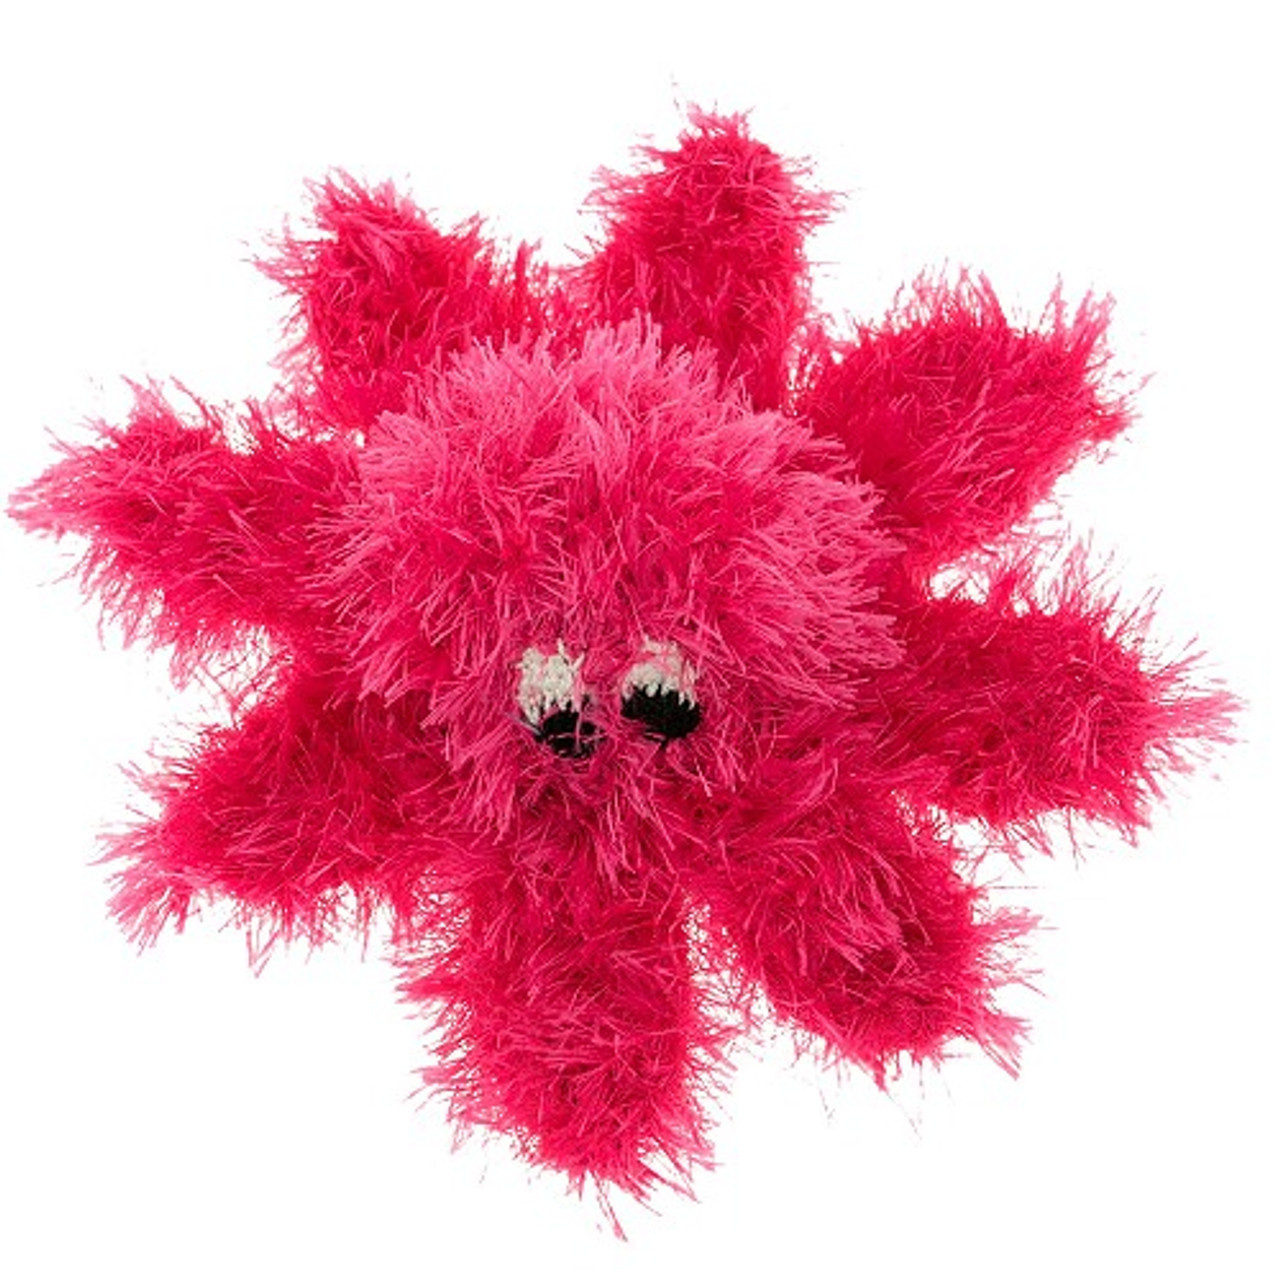 Pink Chewnel Dog Toy Purse Girl Funny Dog Toys Pet Fleece Squeak